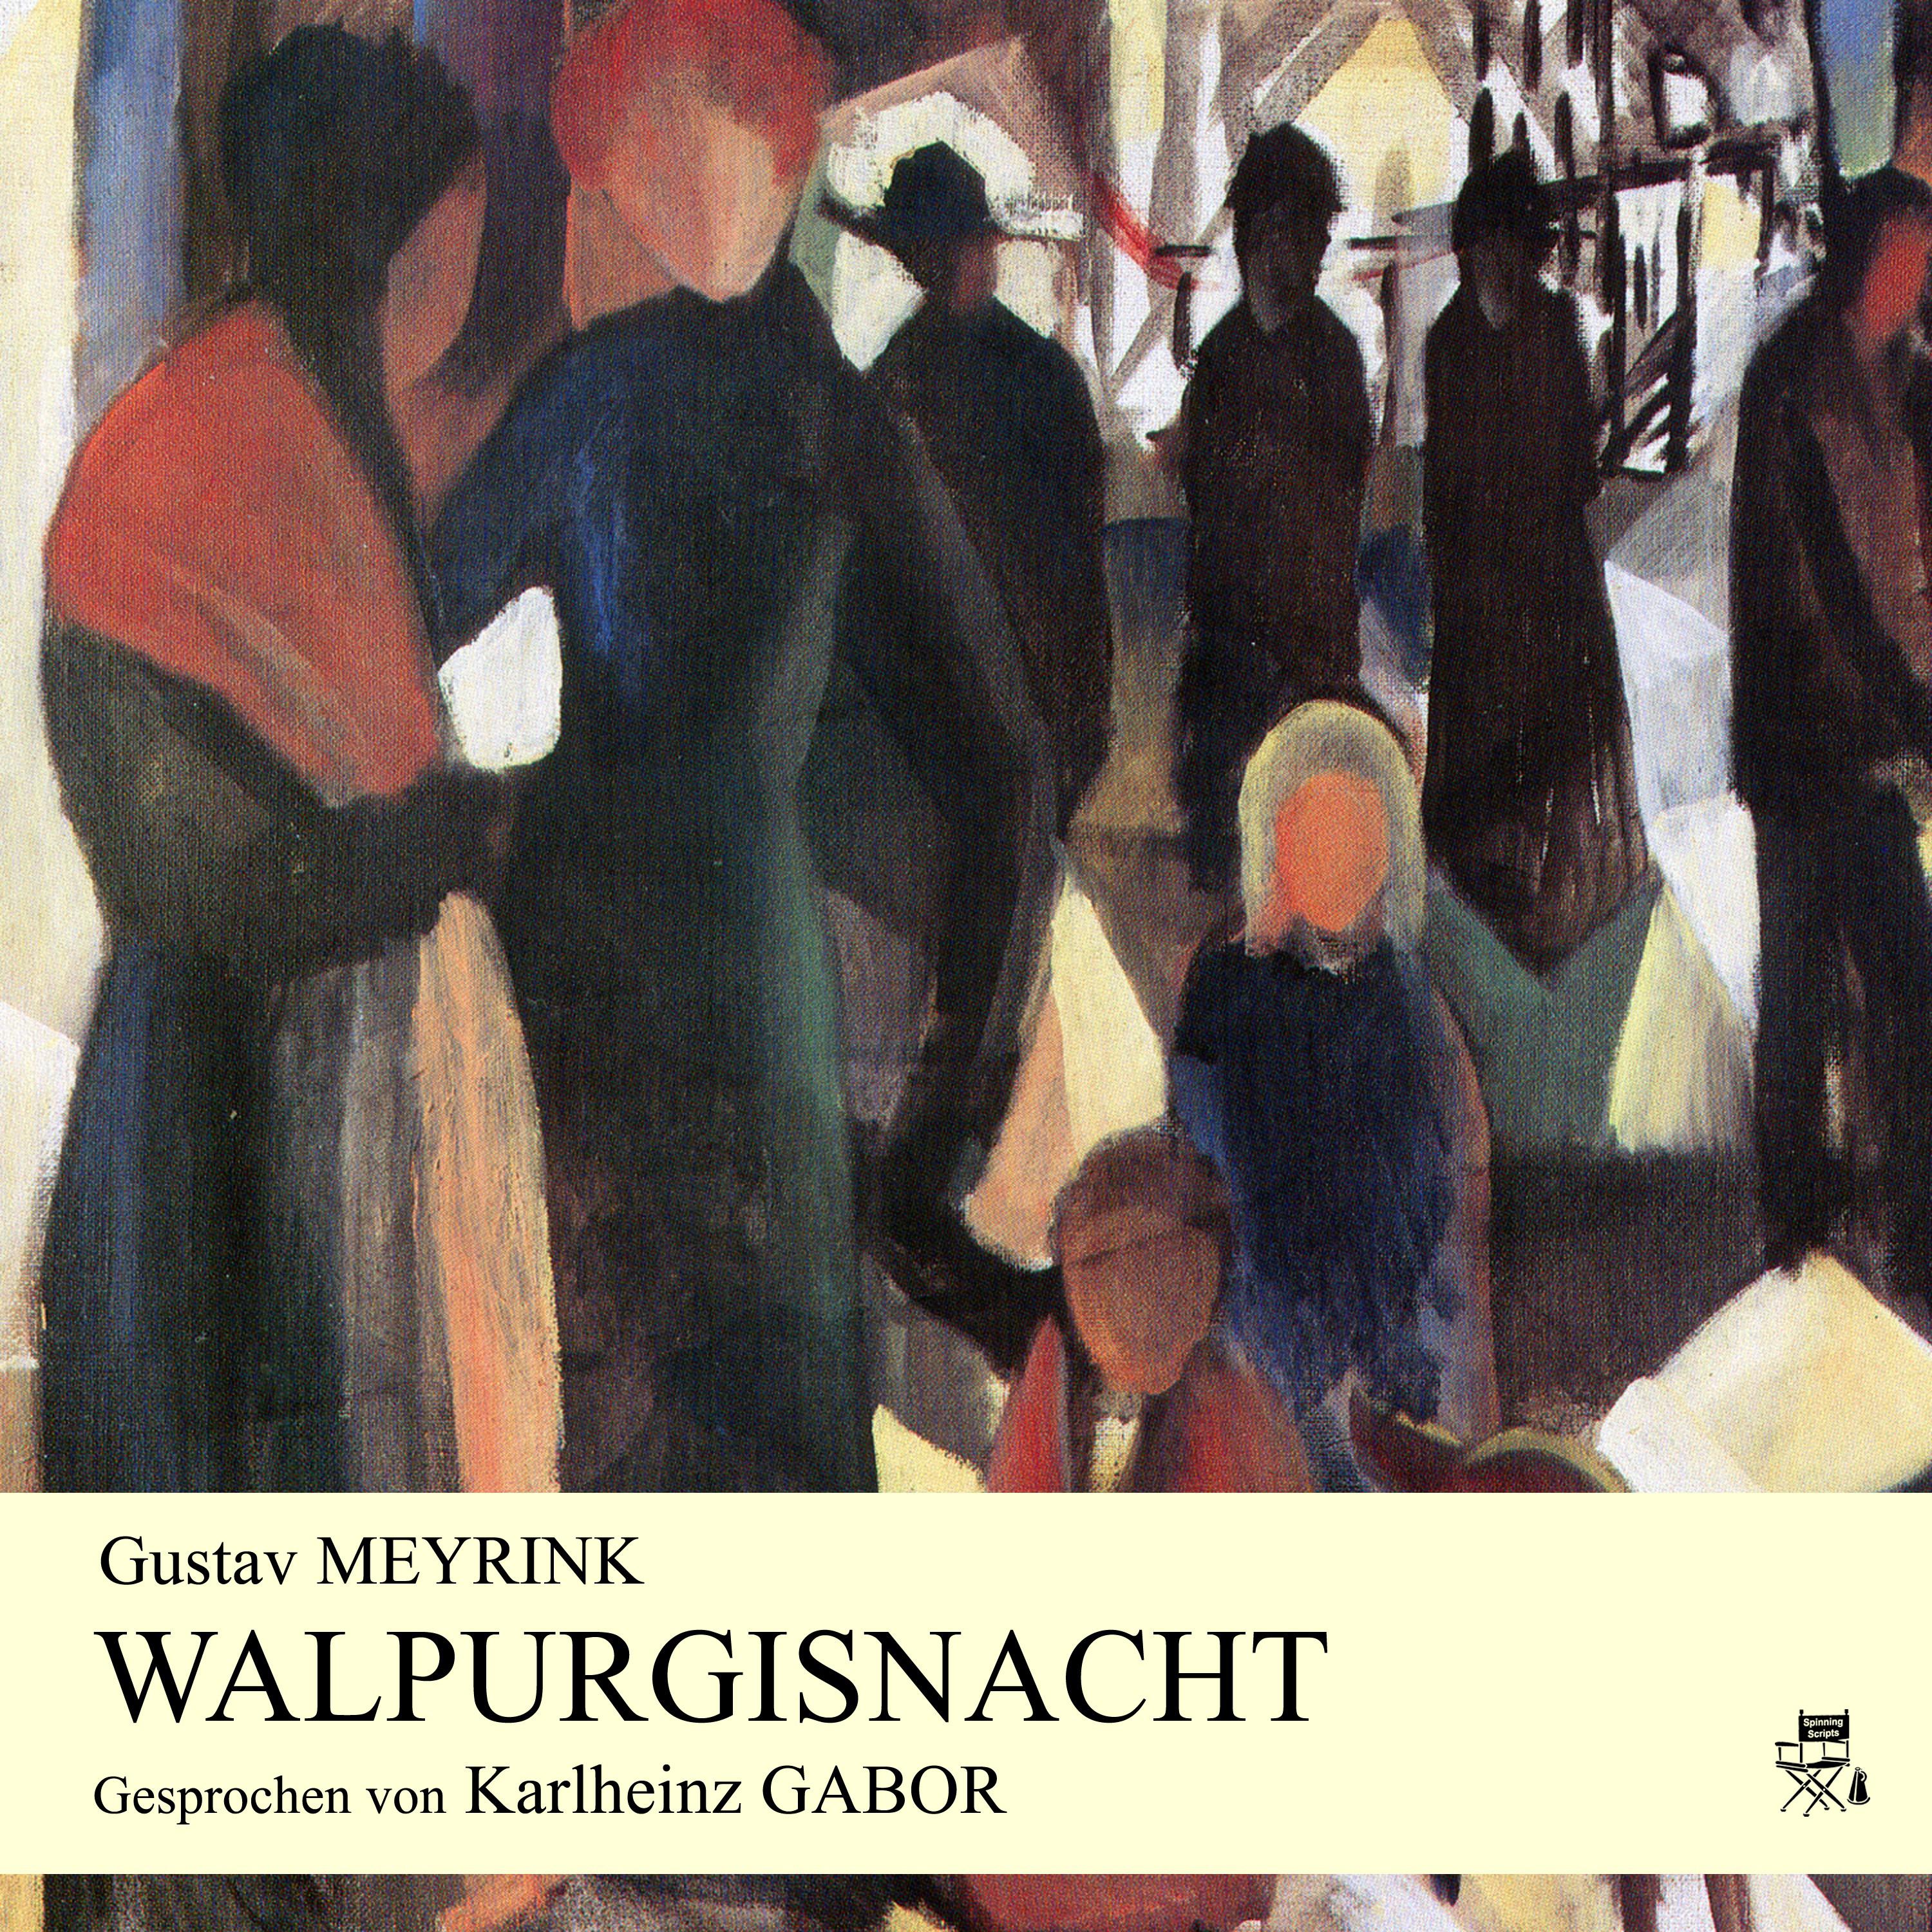 Kapitel 4: Walpurgisnacht (Teil 12)